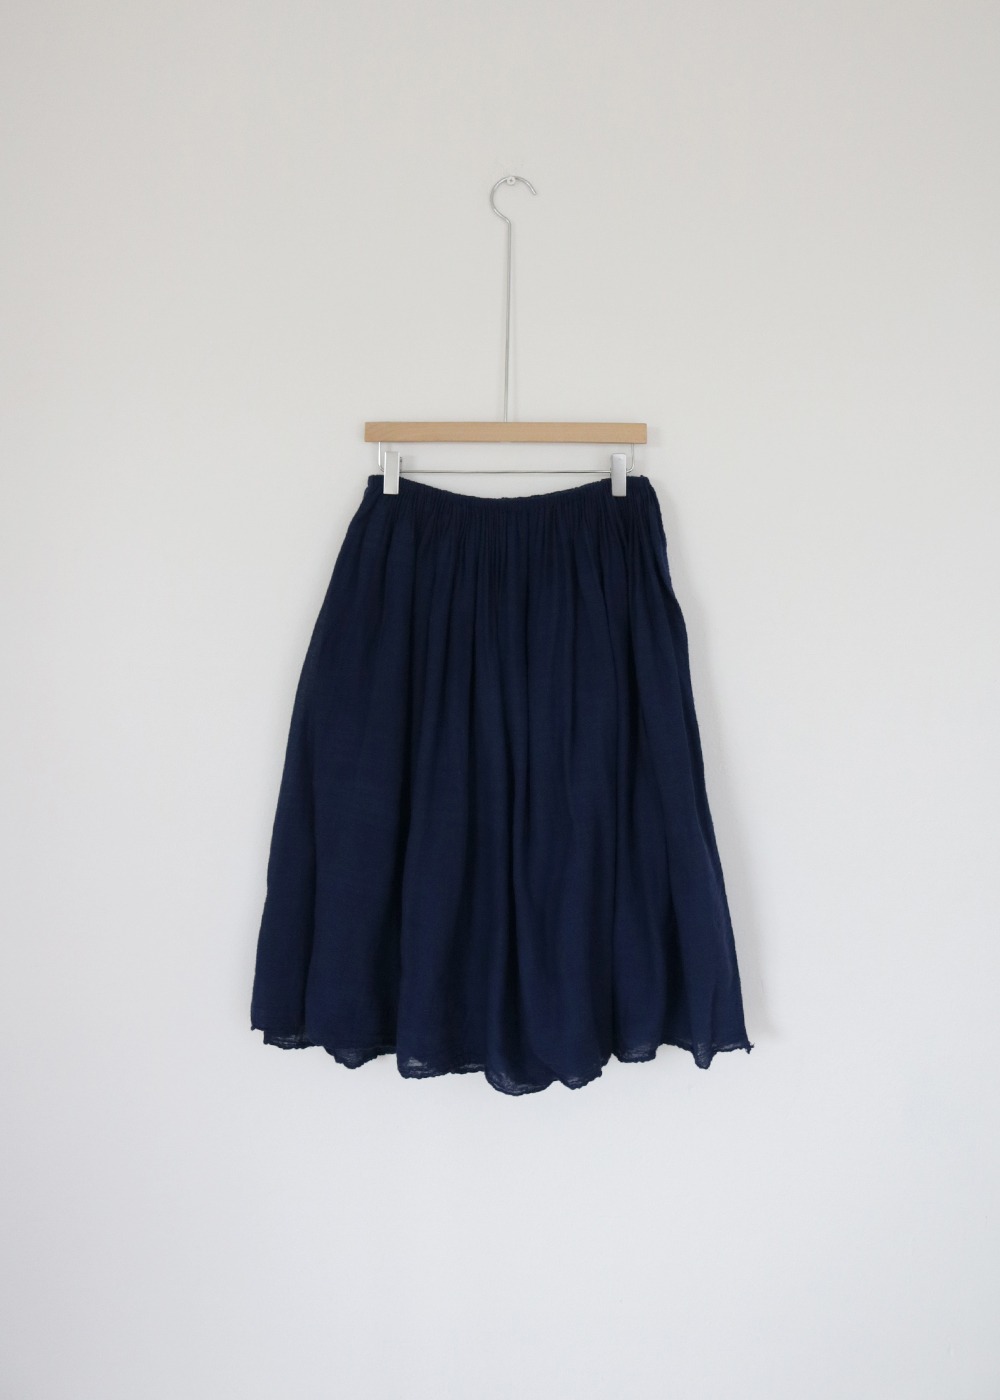 Double Layered Gathered Skirt